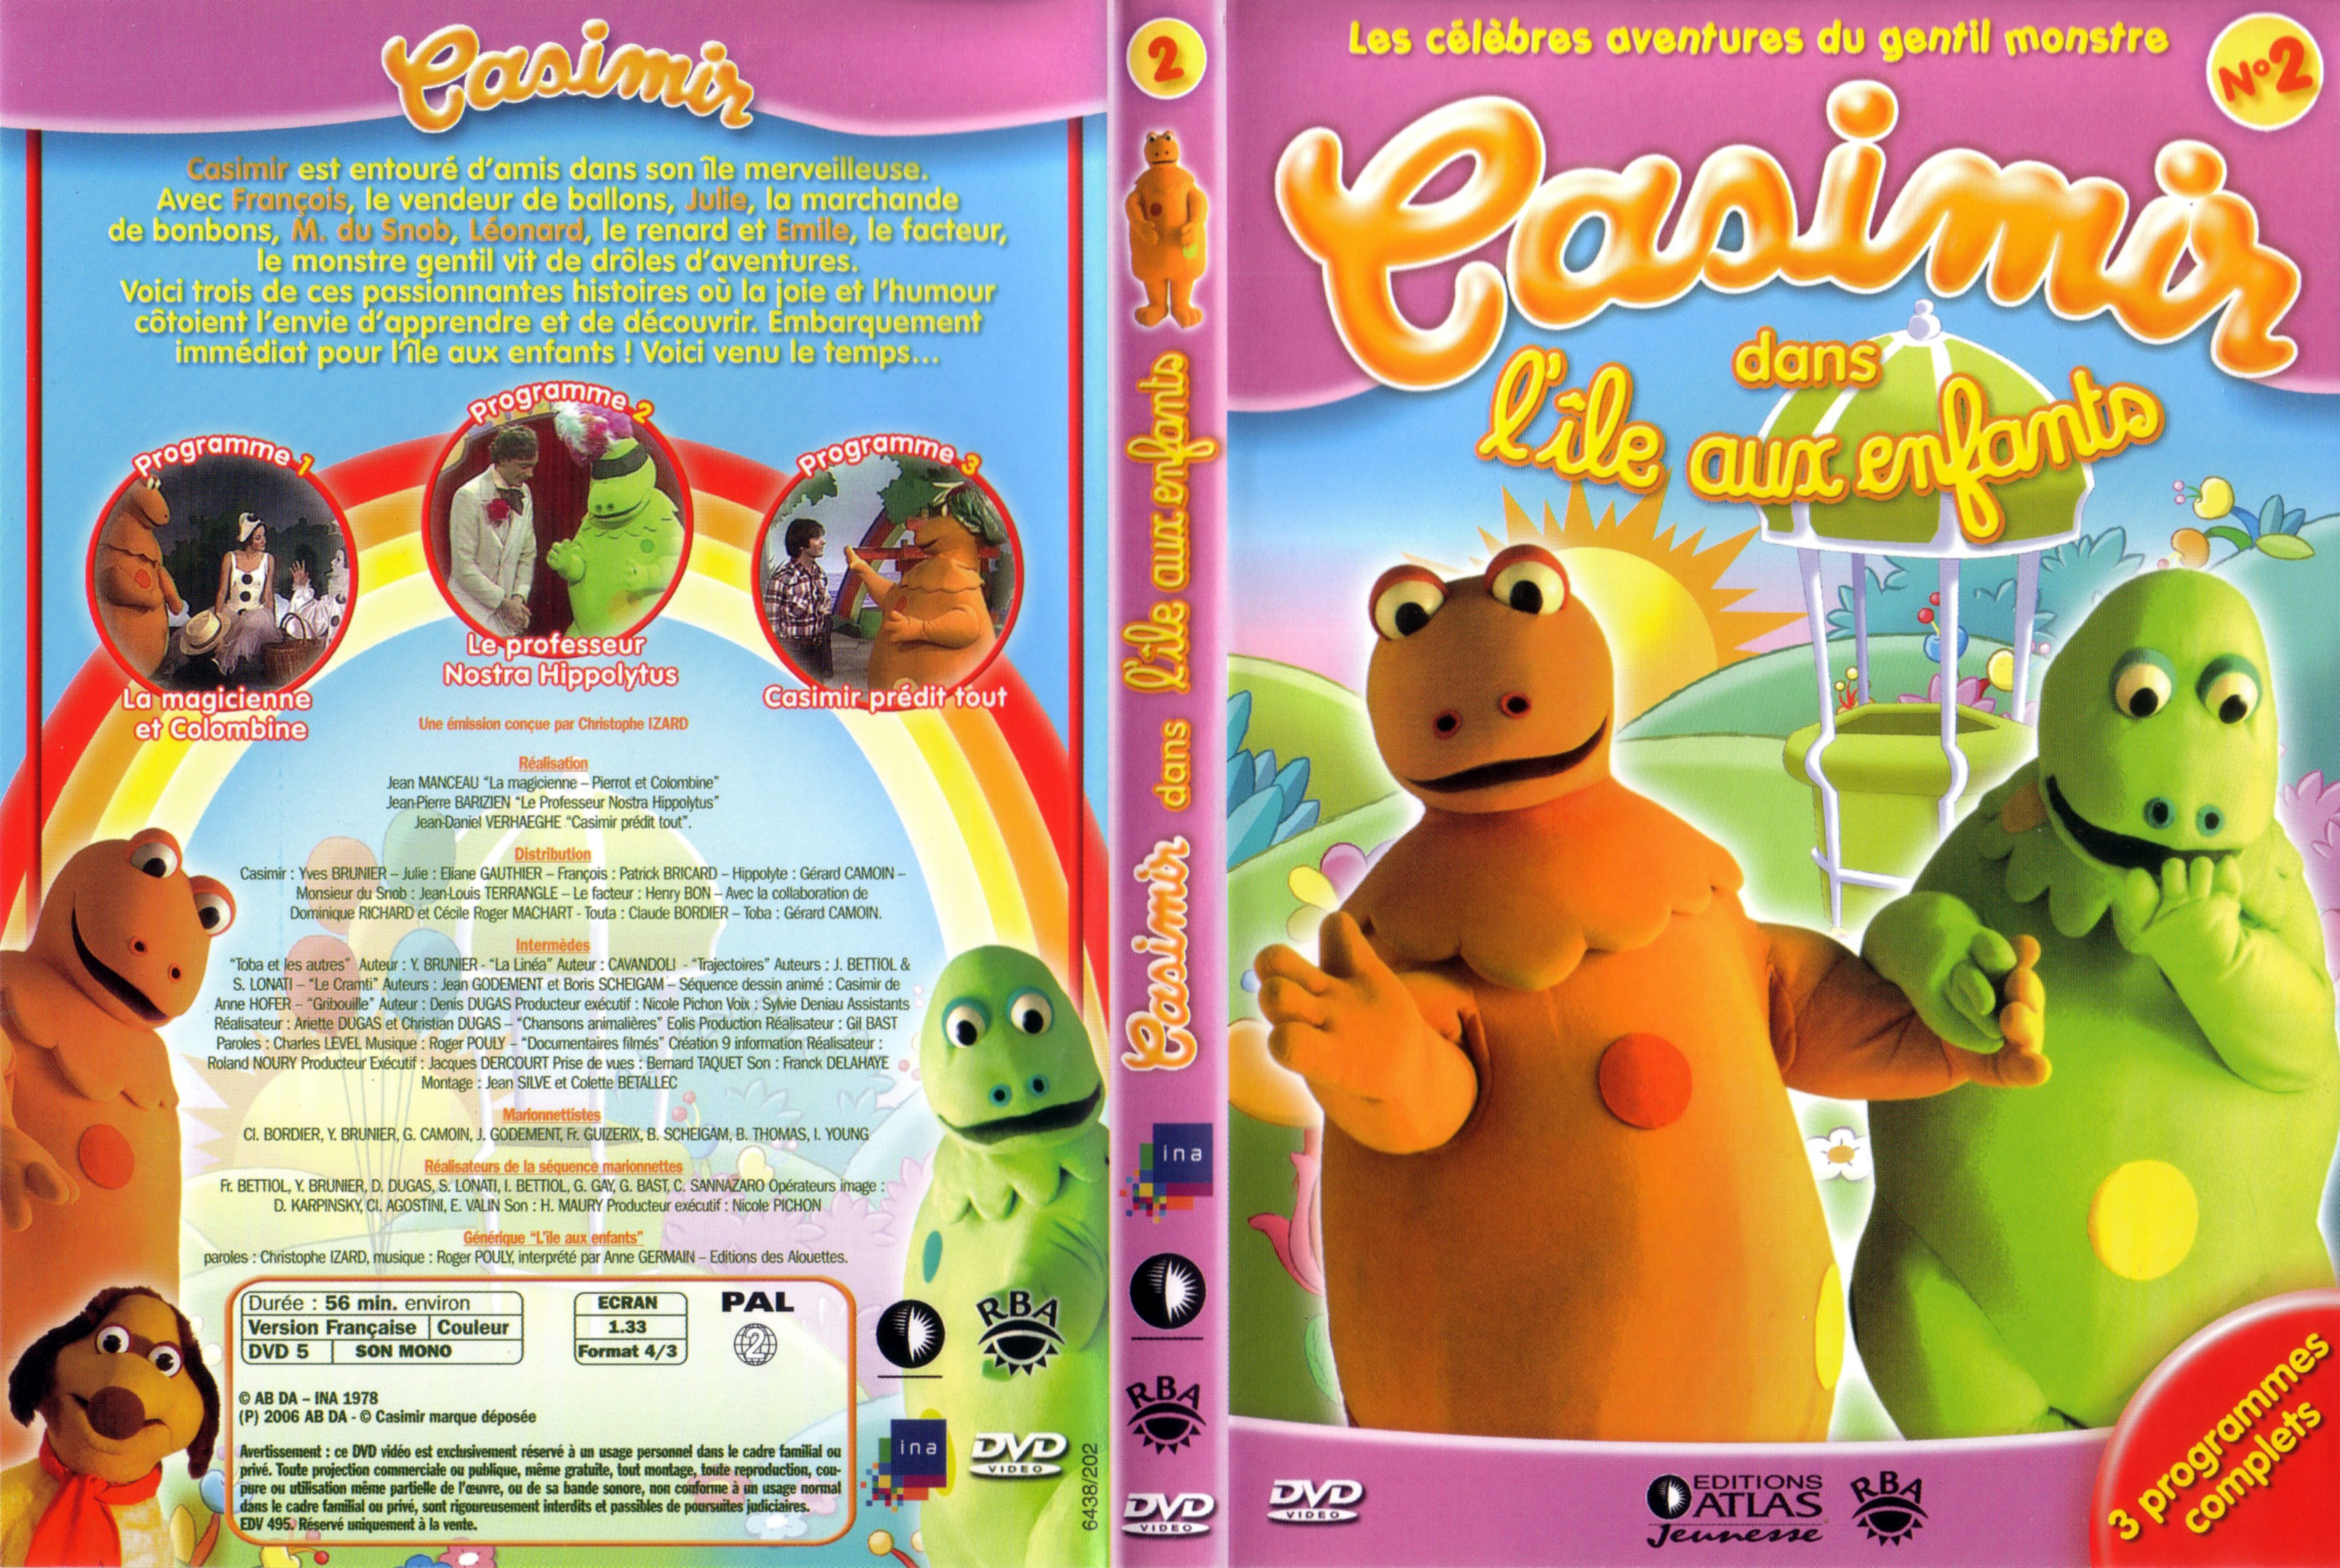 Jaquette DVD Casimir vol 02